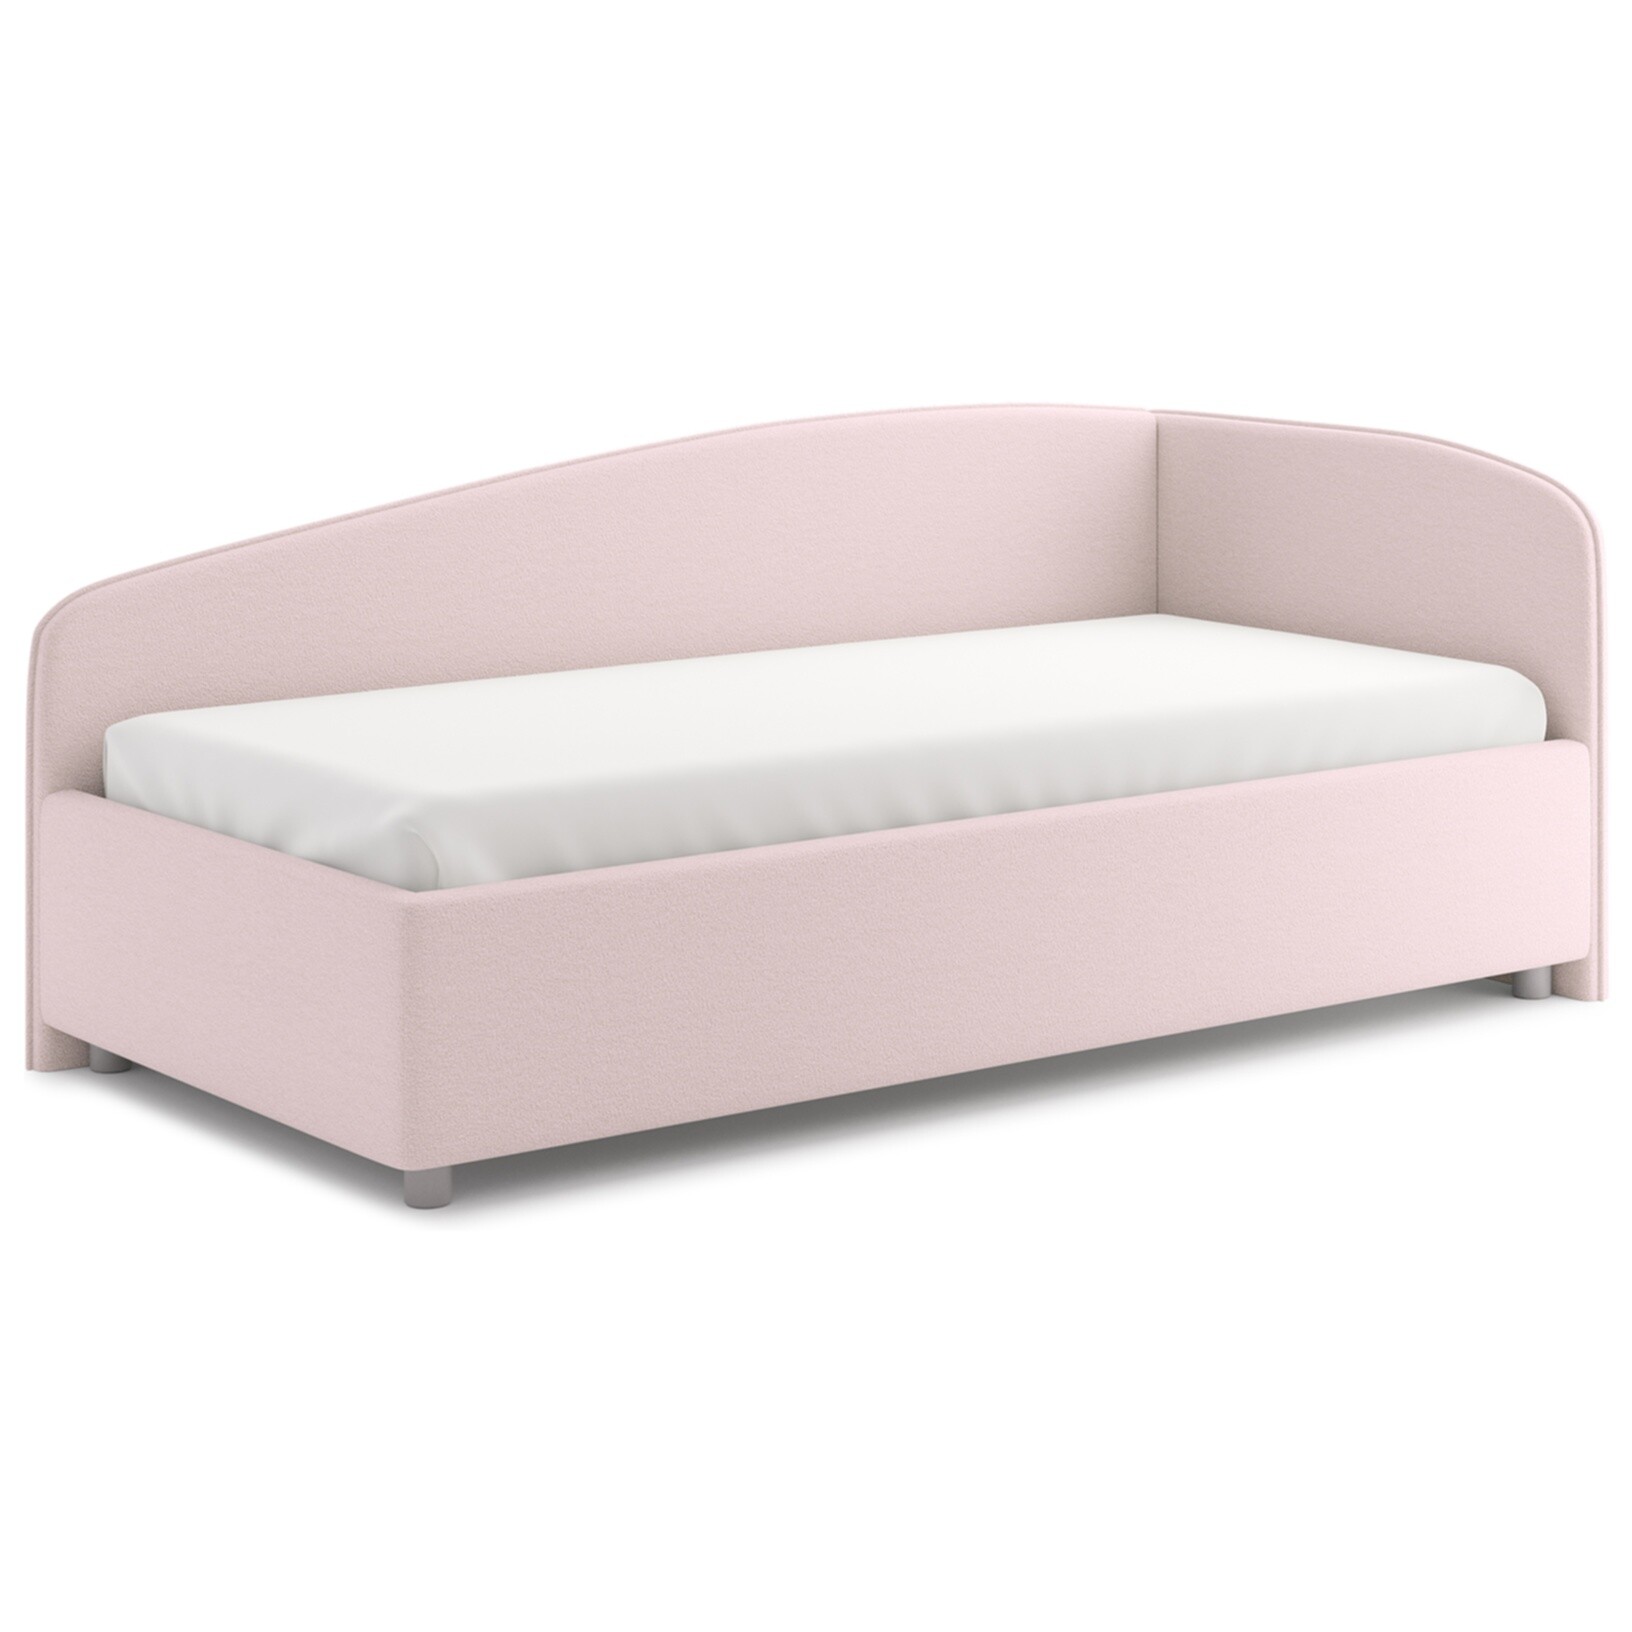 Кровать односпальная 90х200 см тедди розовый Paola R